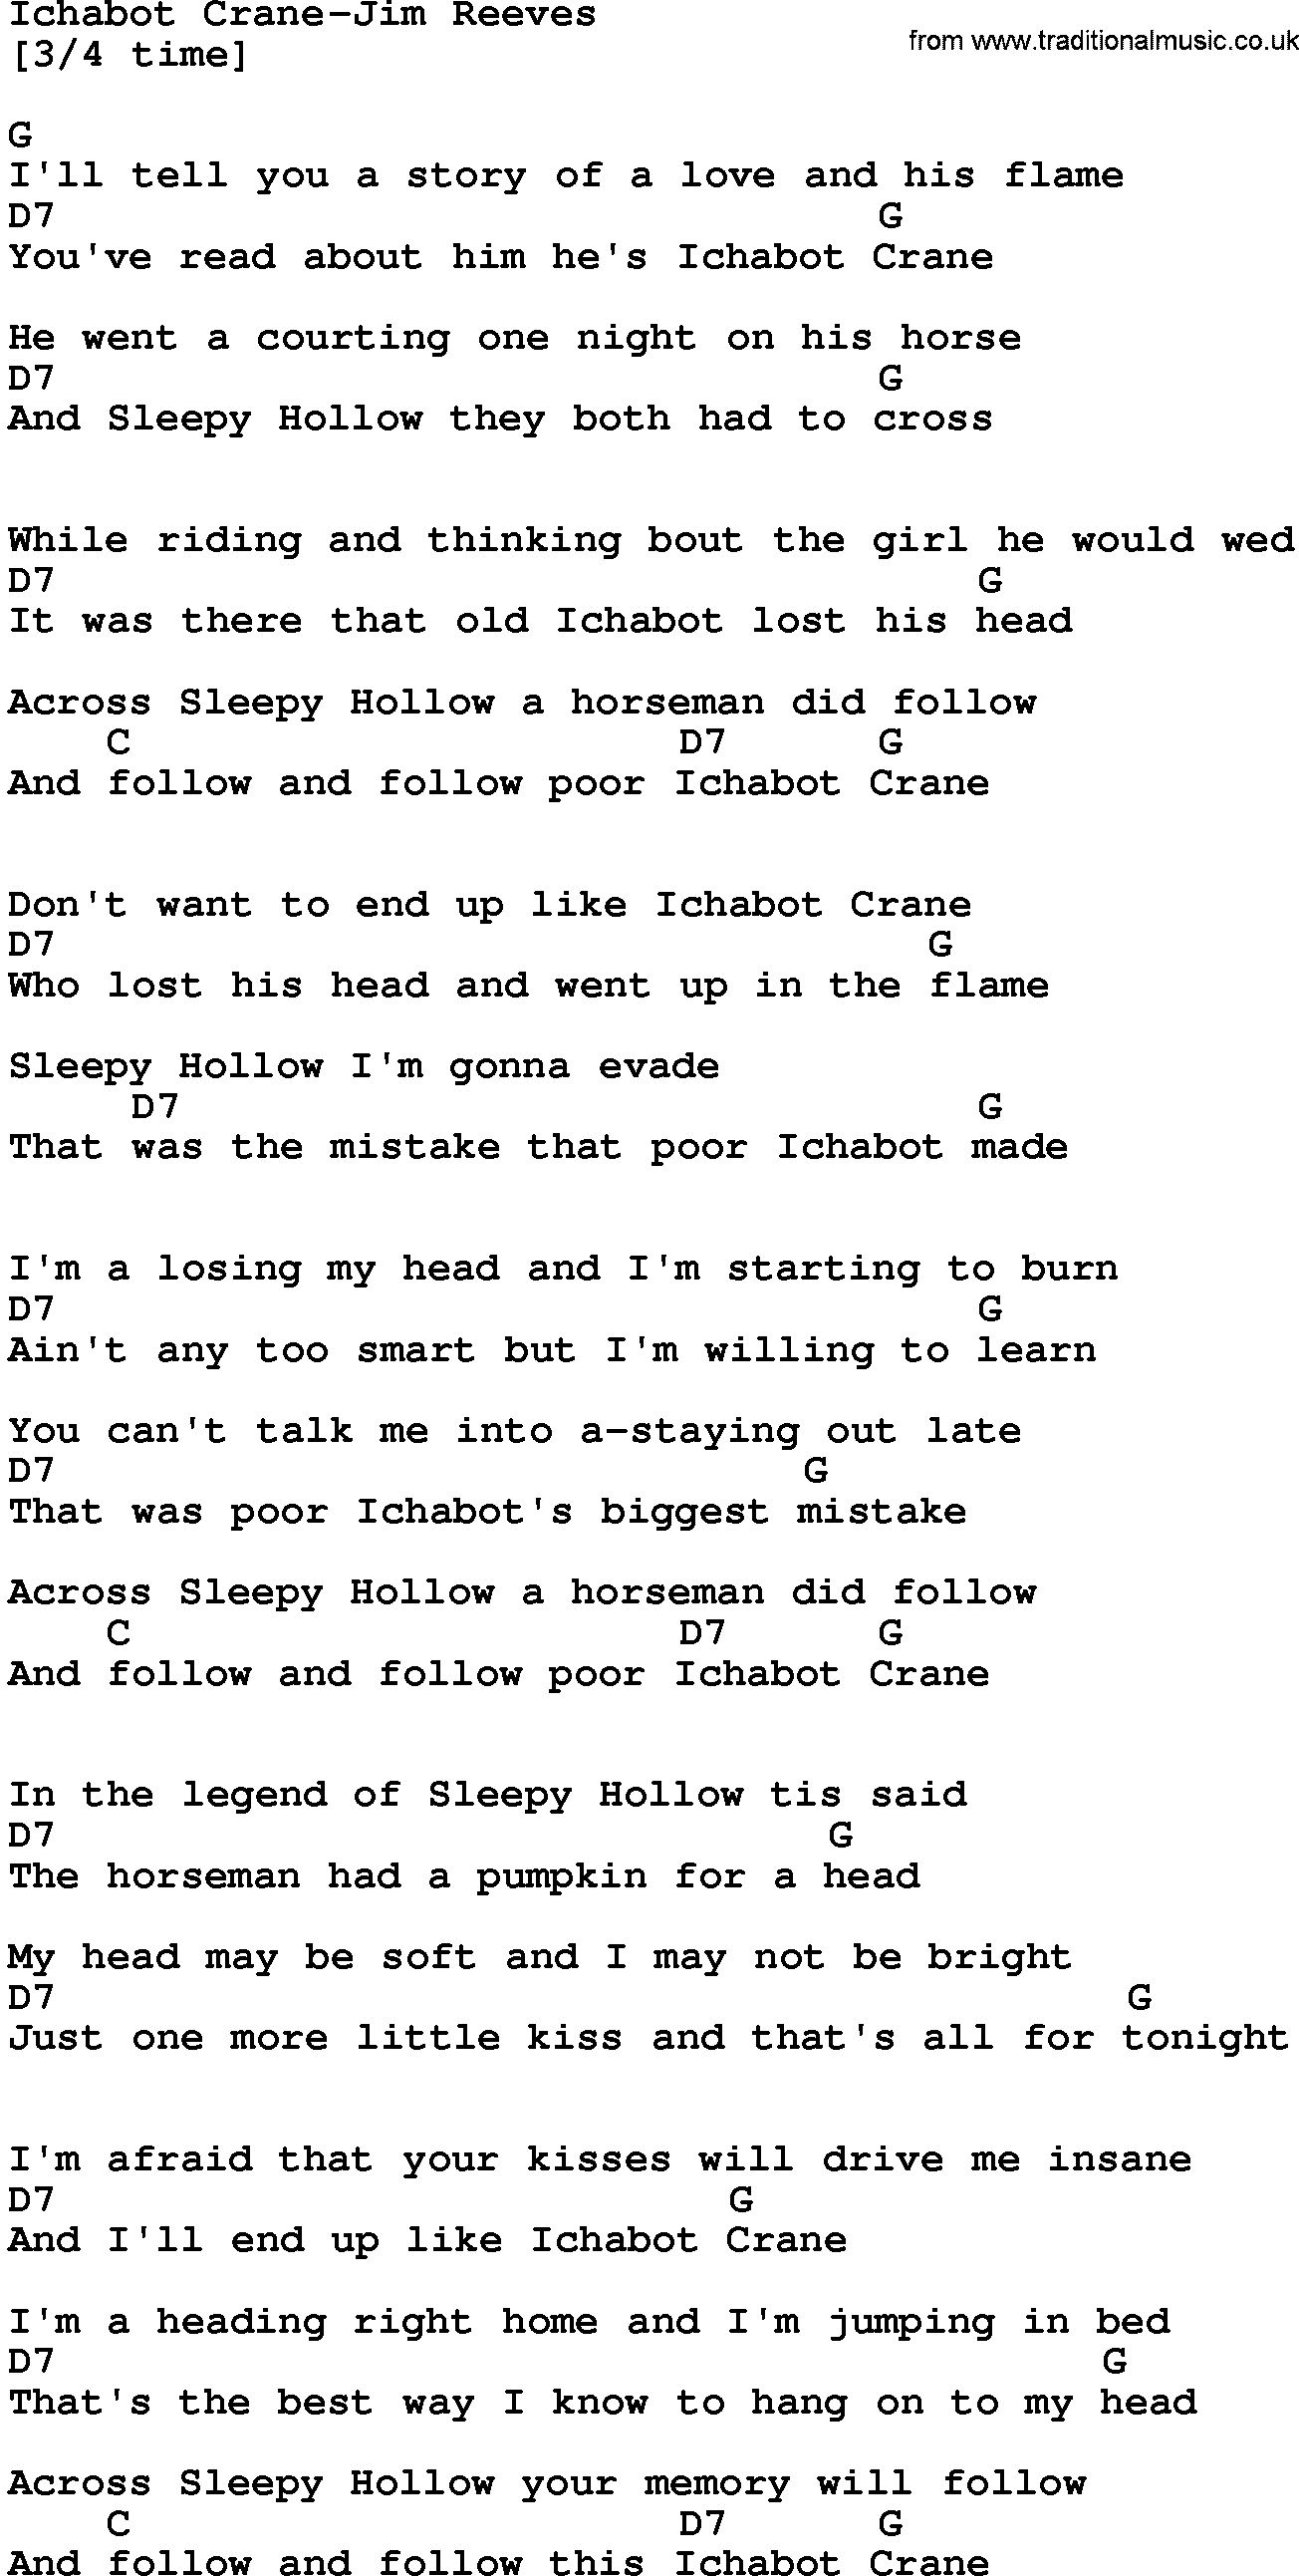 Country music song: Ichabot Crane-Jim Reeves lyrics and chords